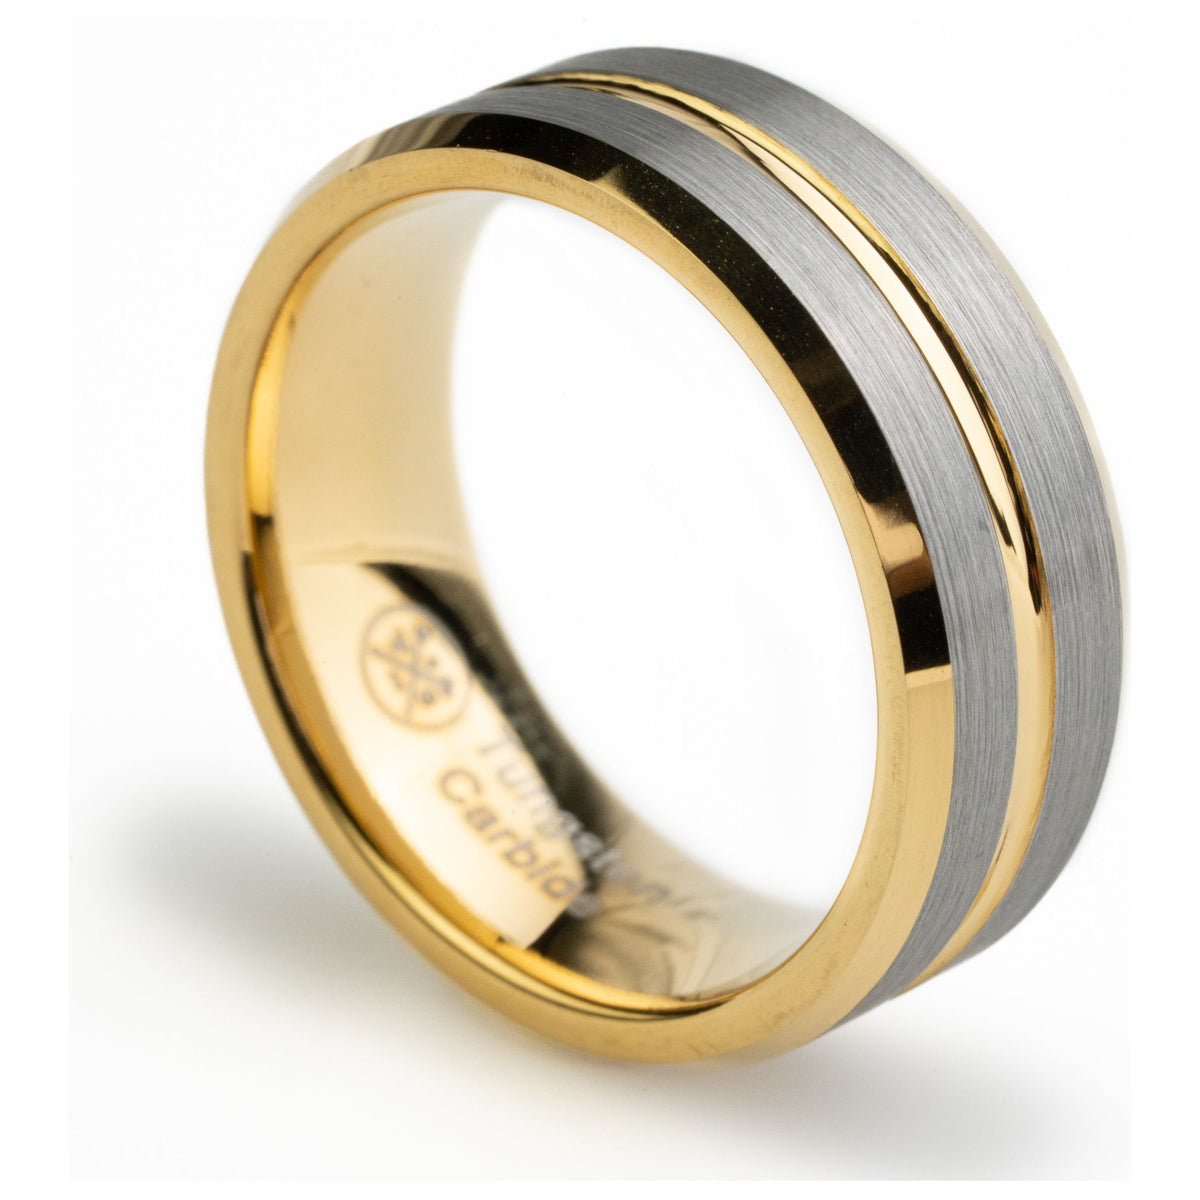 The “Sinatra” Ring